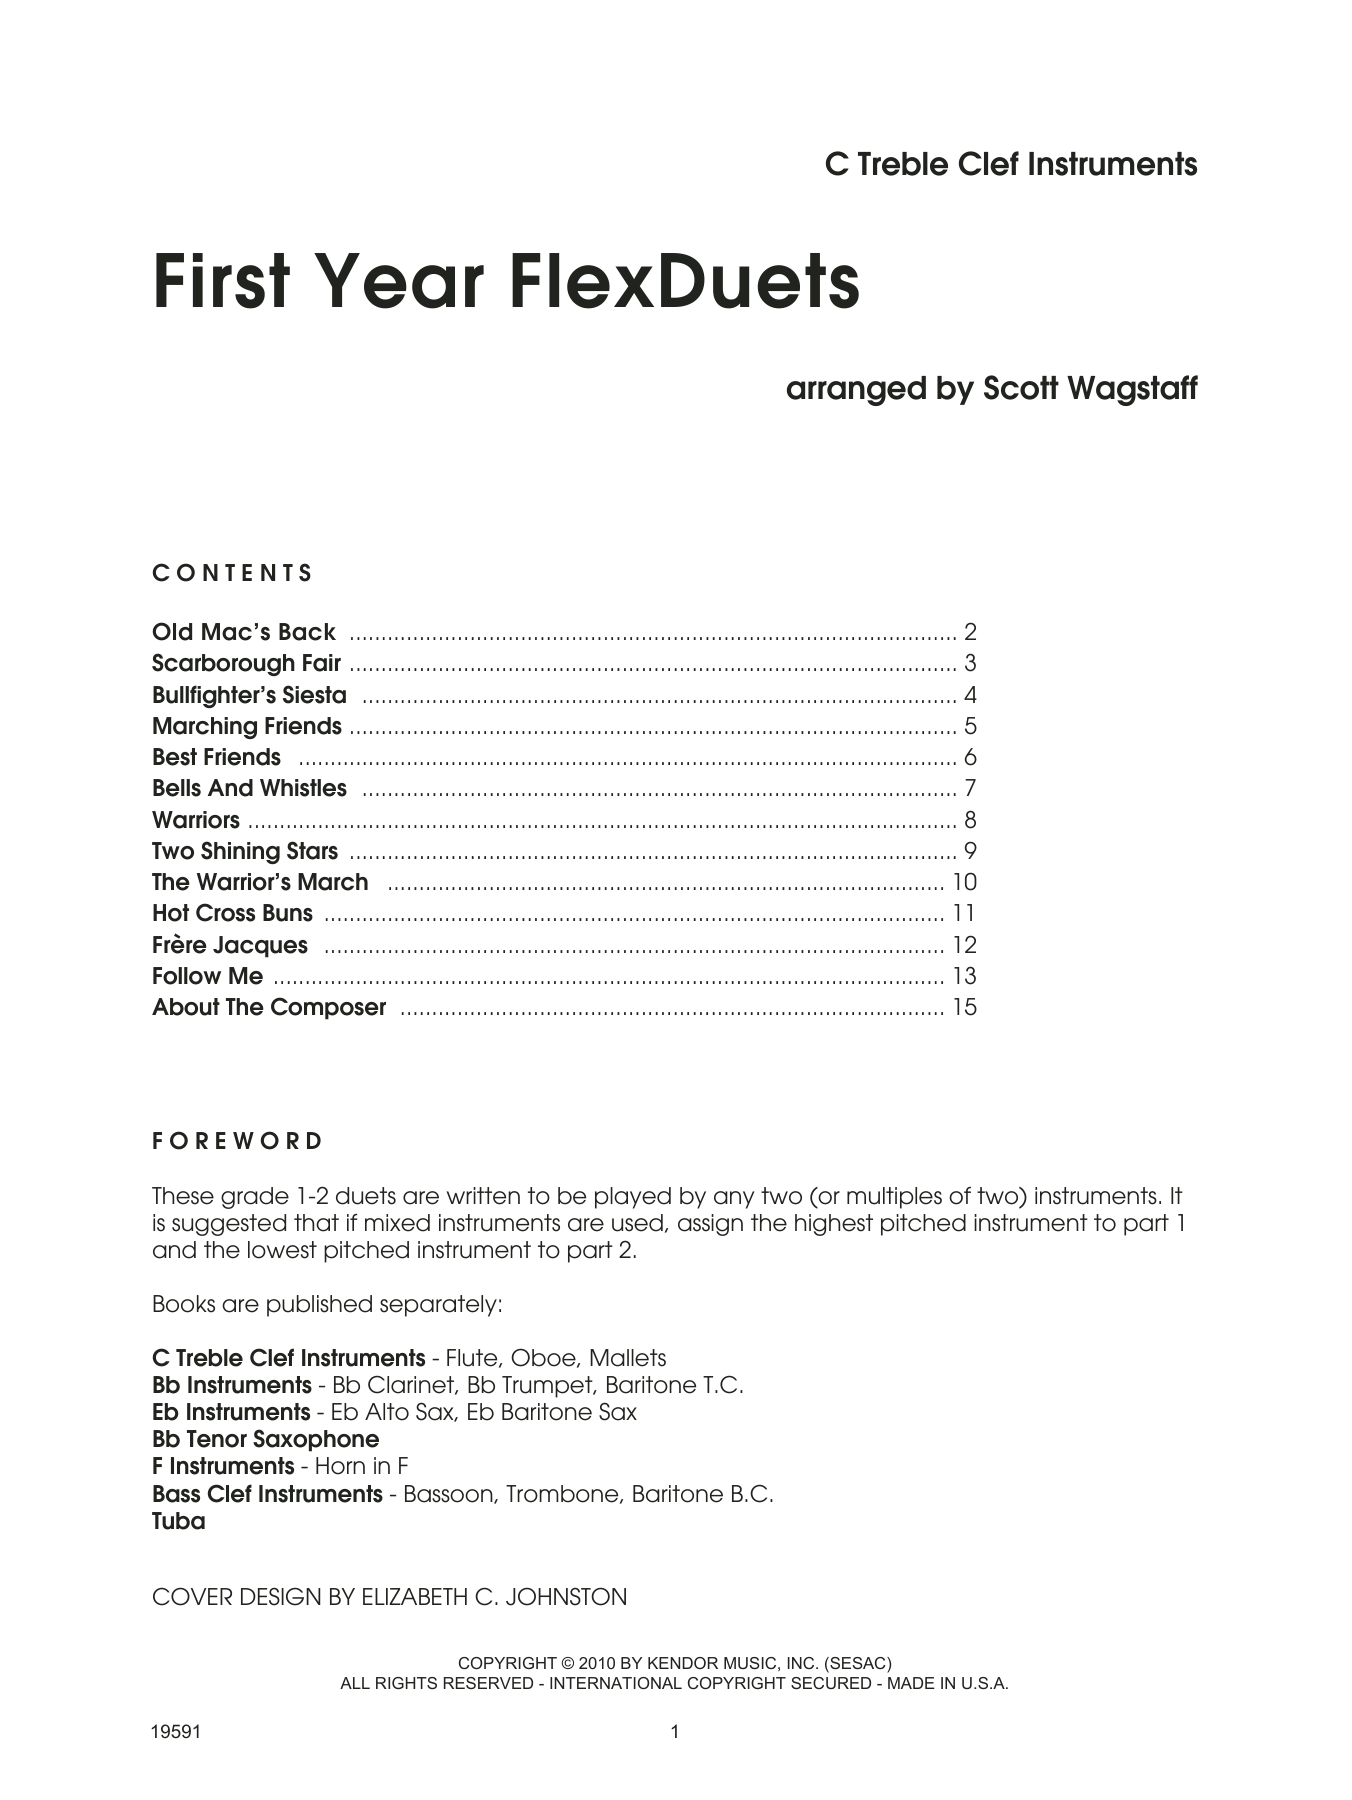 Download Scott Wagstaff First Year FlexDuets - C Treble Clef In Sheet Music